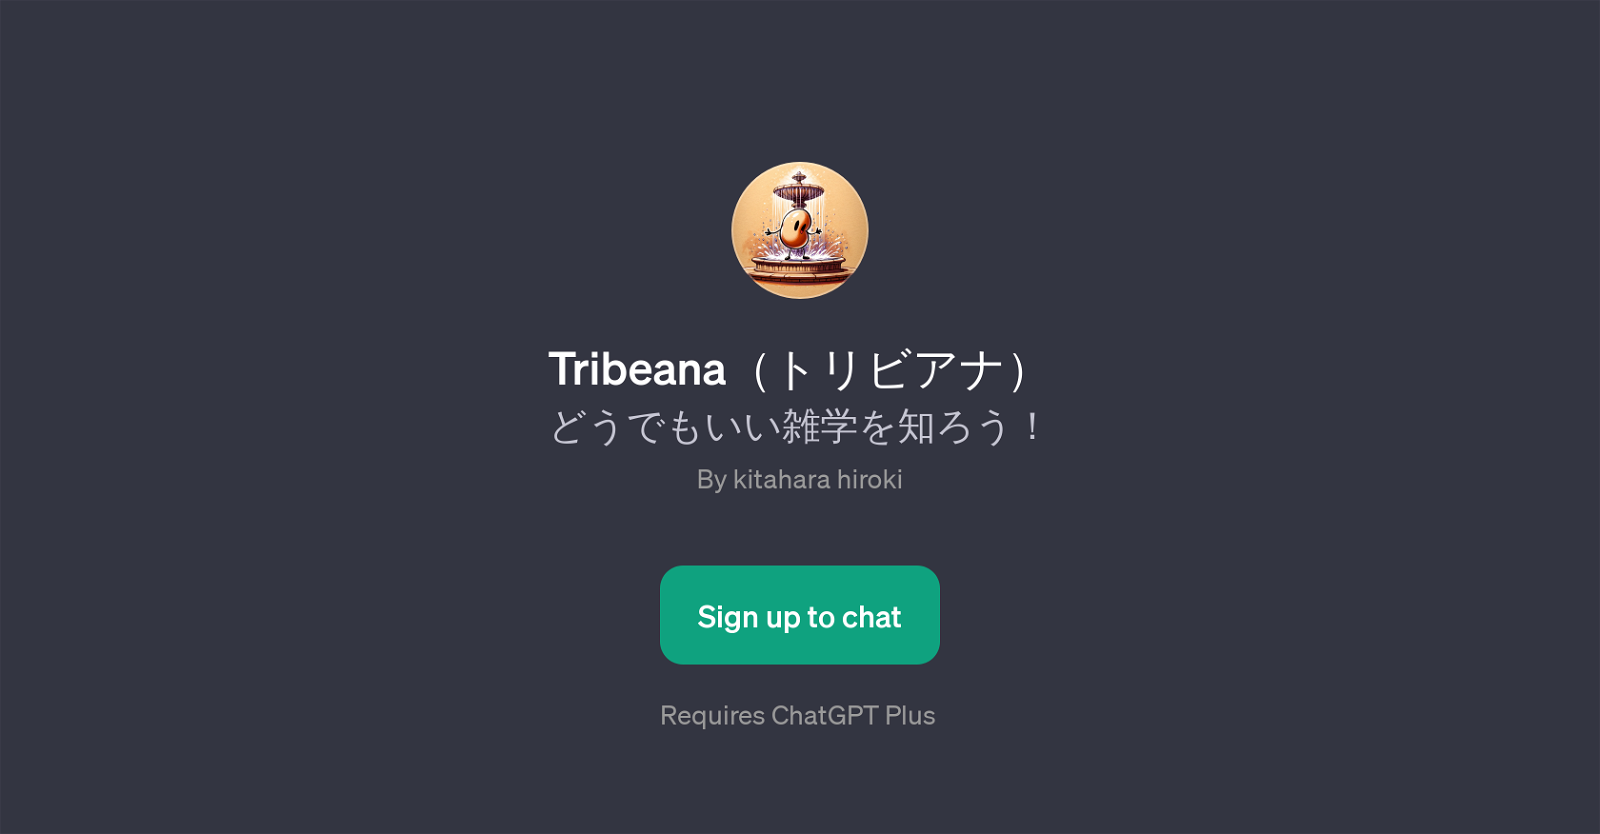 Tribeana website